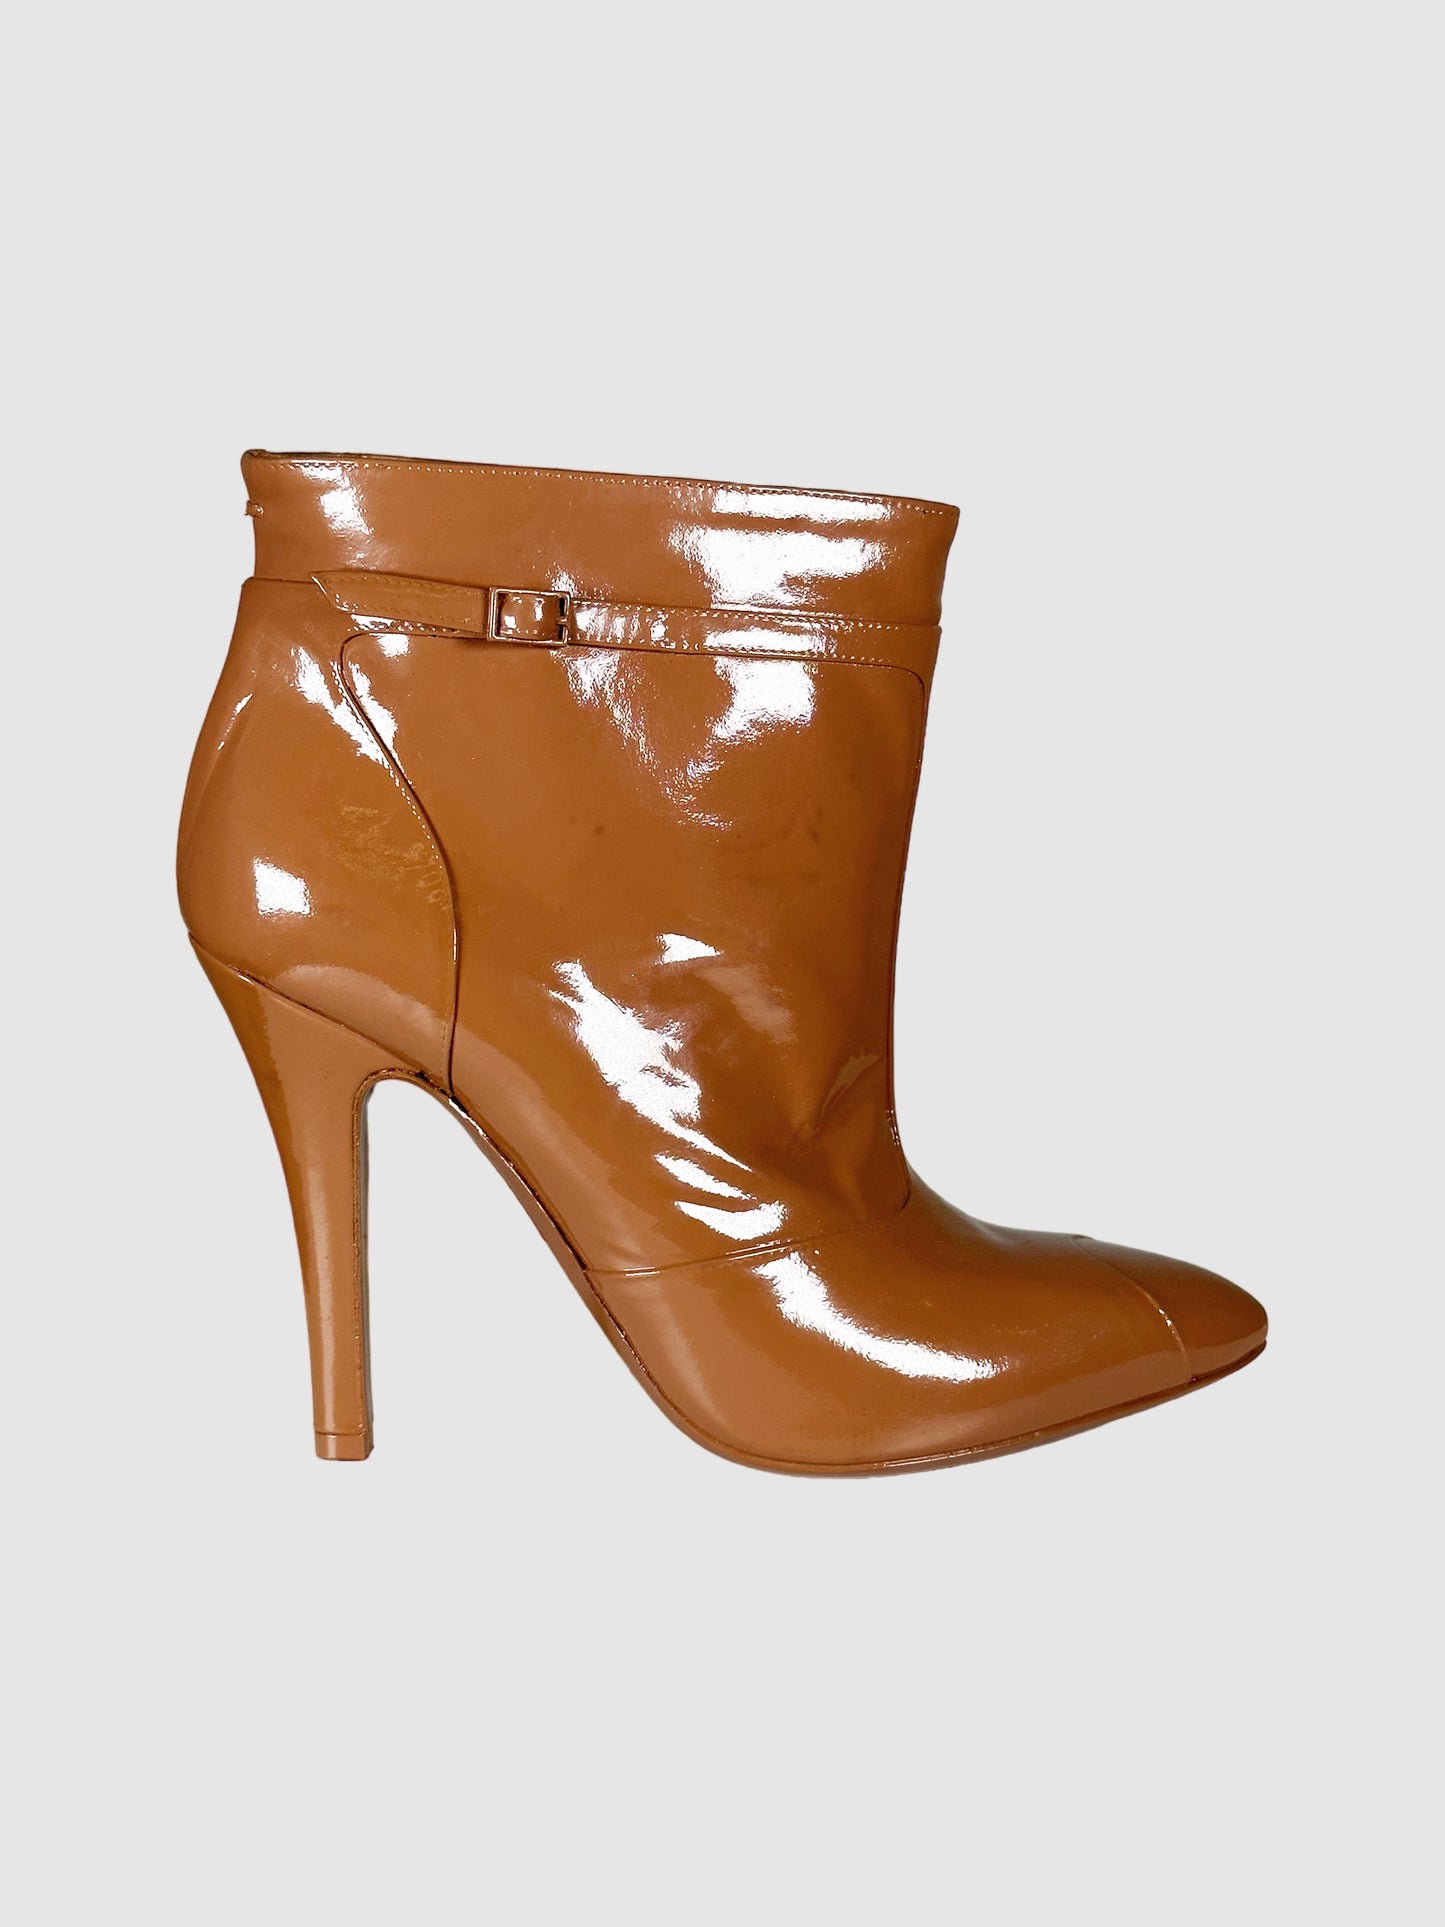 Maison Margiela Patent Leather Ankle Boots - Size 37